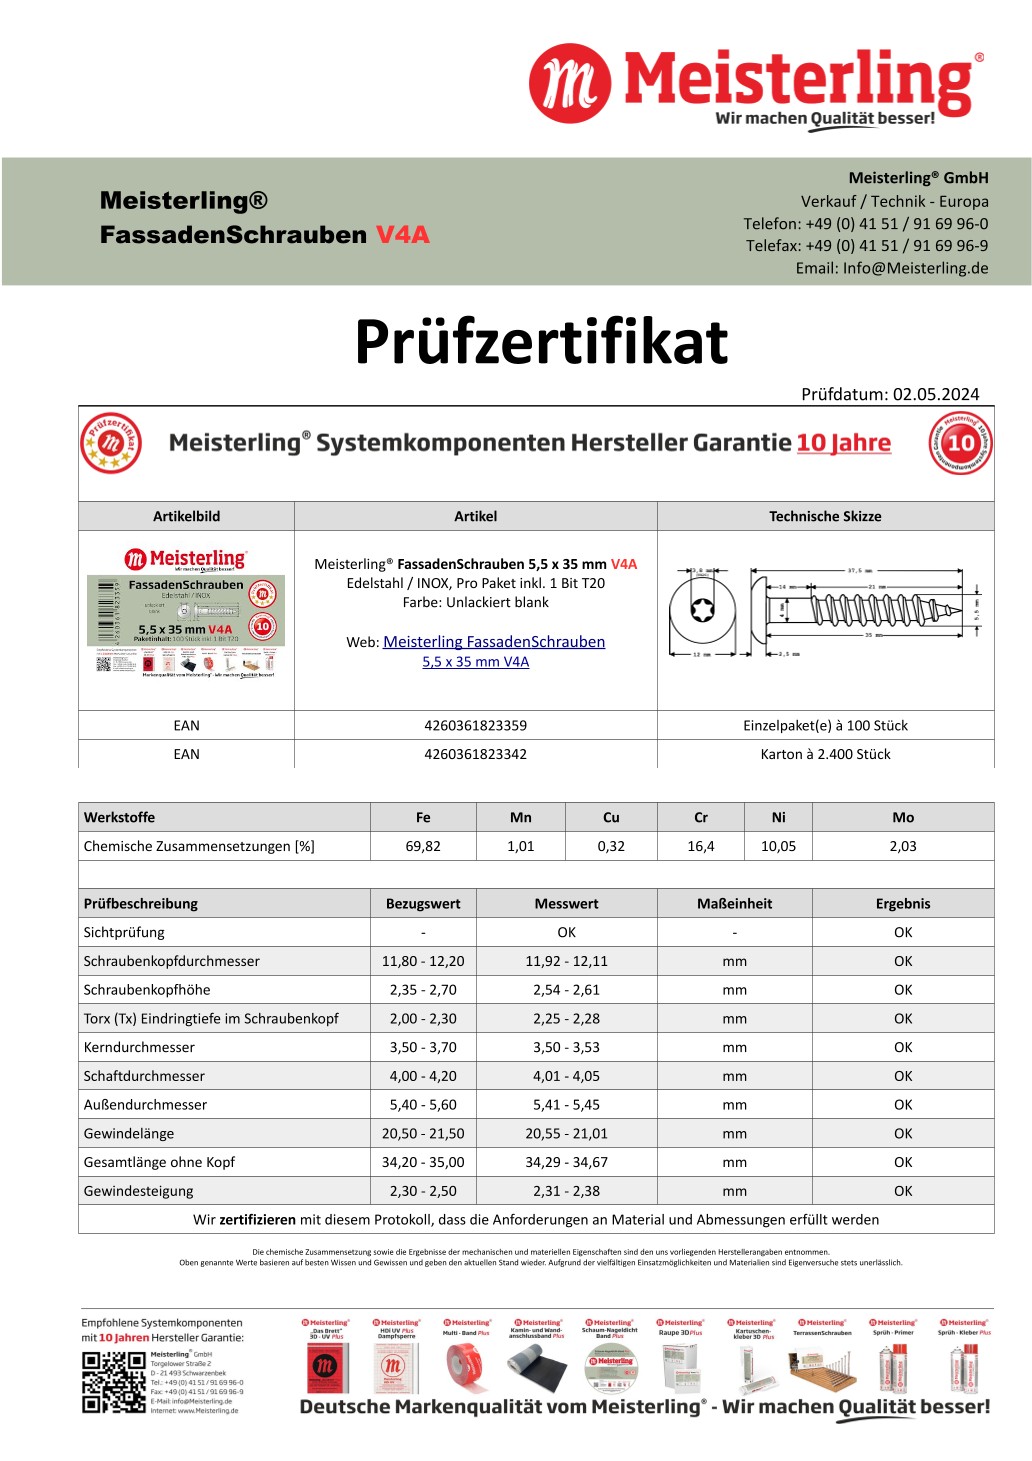 Prüfzertifikat Meisterling® FassadenSchrauben 5,5 x 35 mm V4a blank